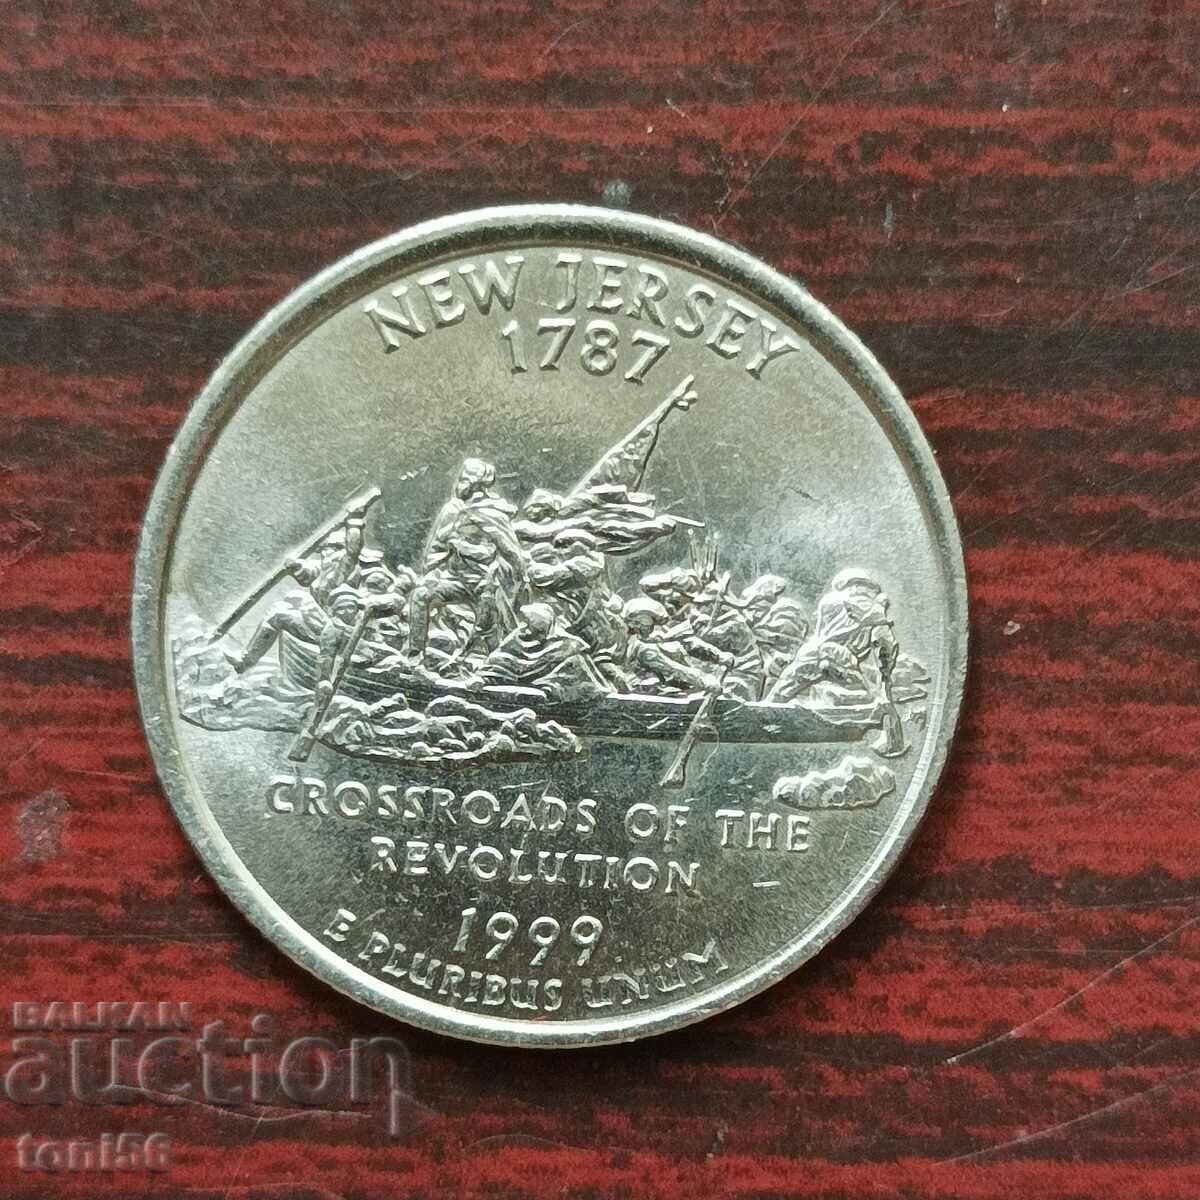 1/4 dolar american 1999 P - New Jersey UNC